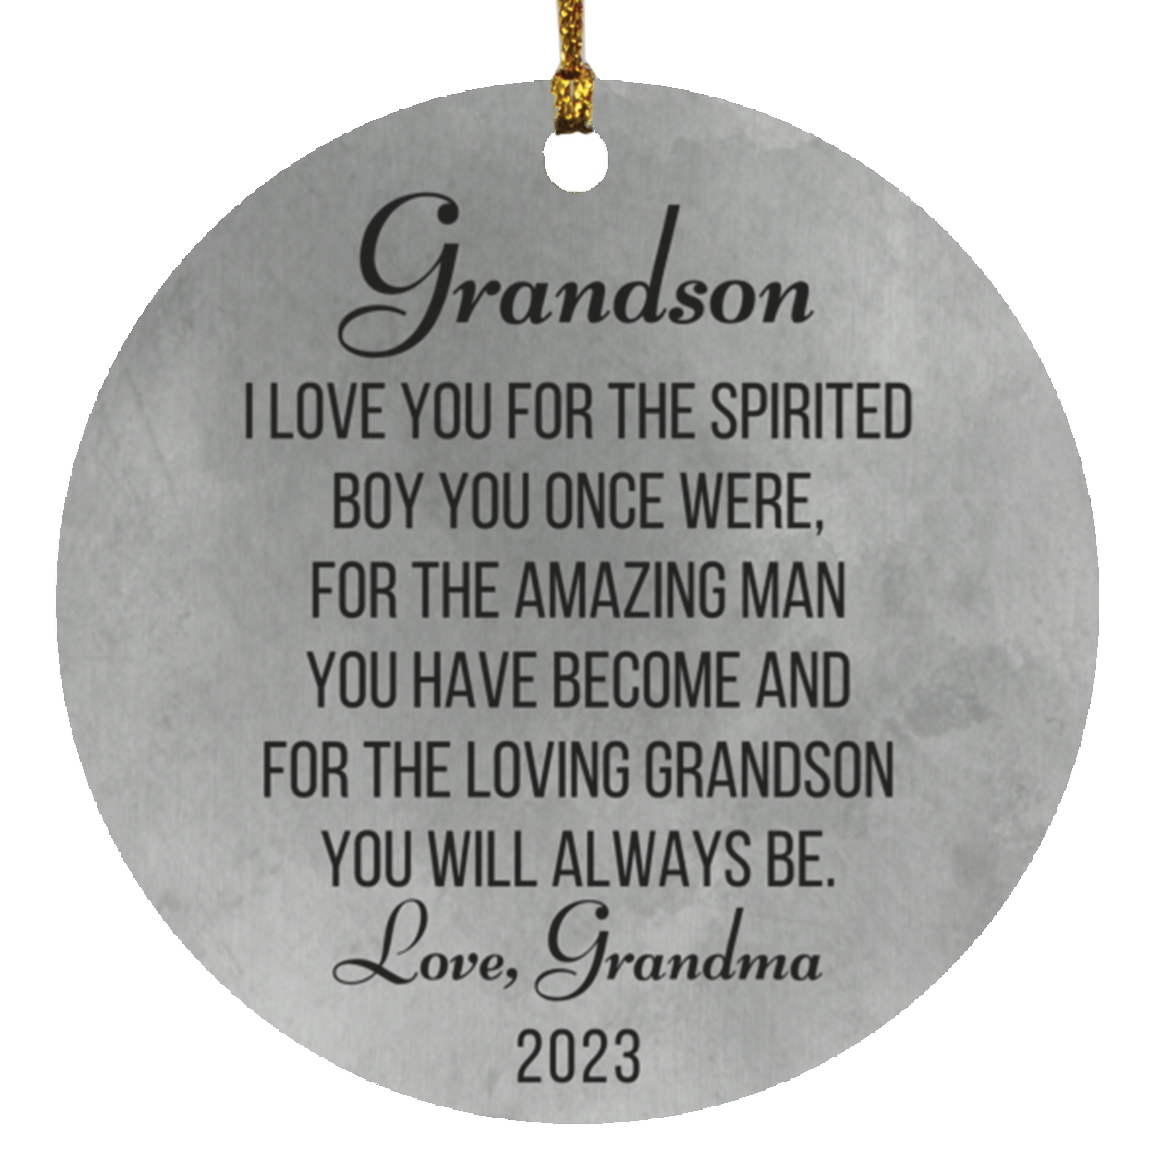 2023 Grandson Ornament